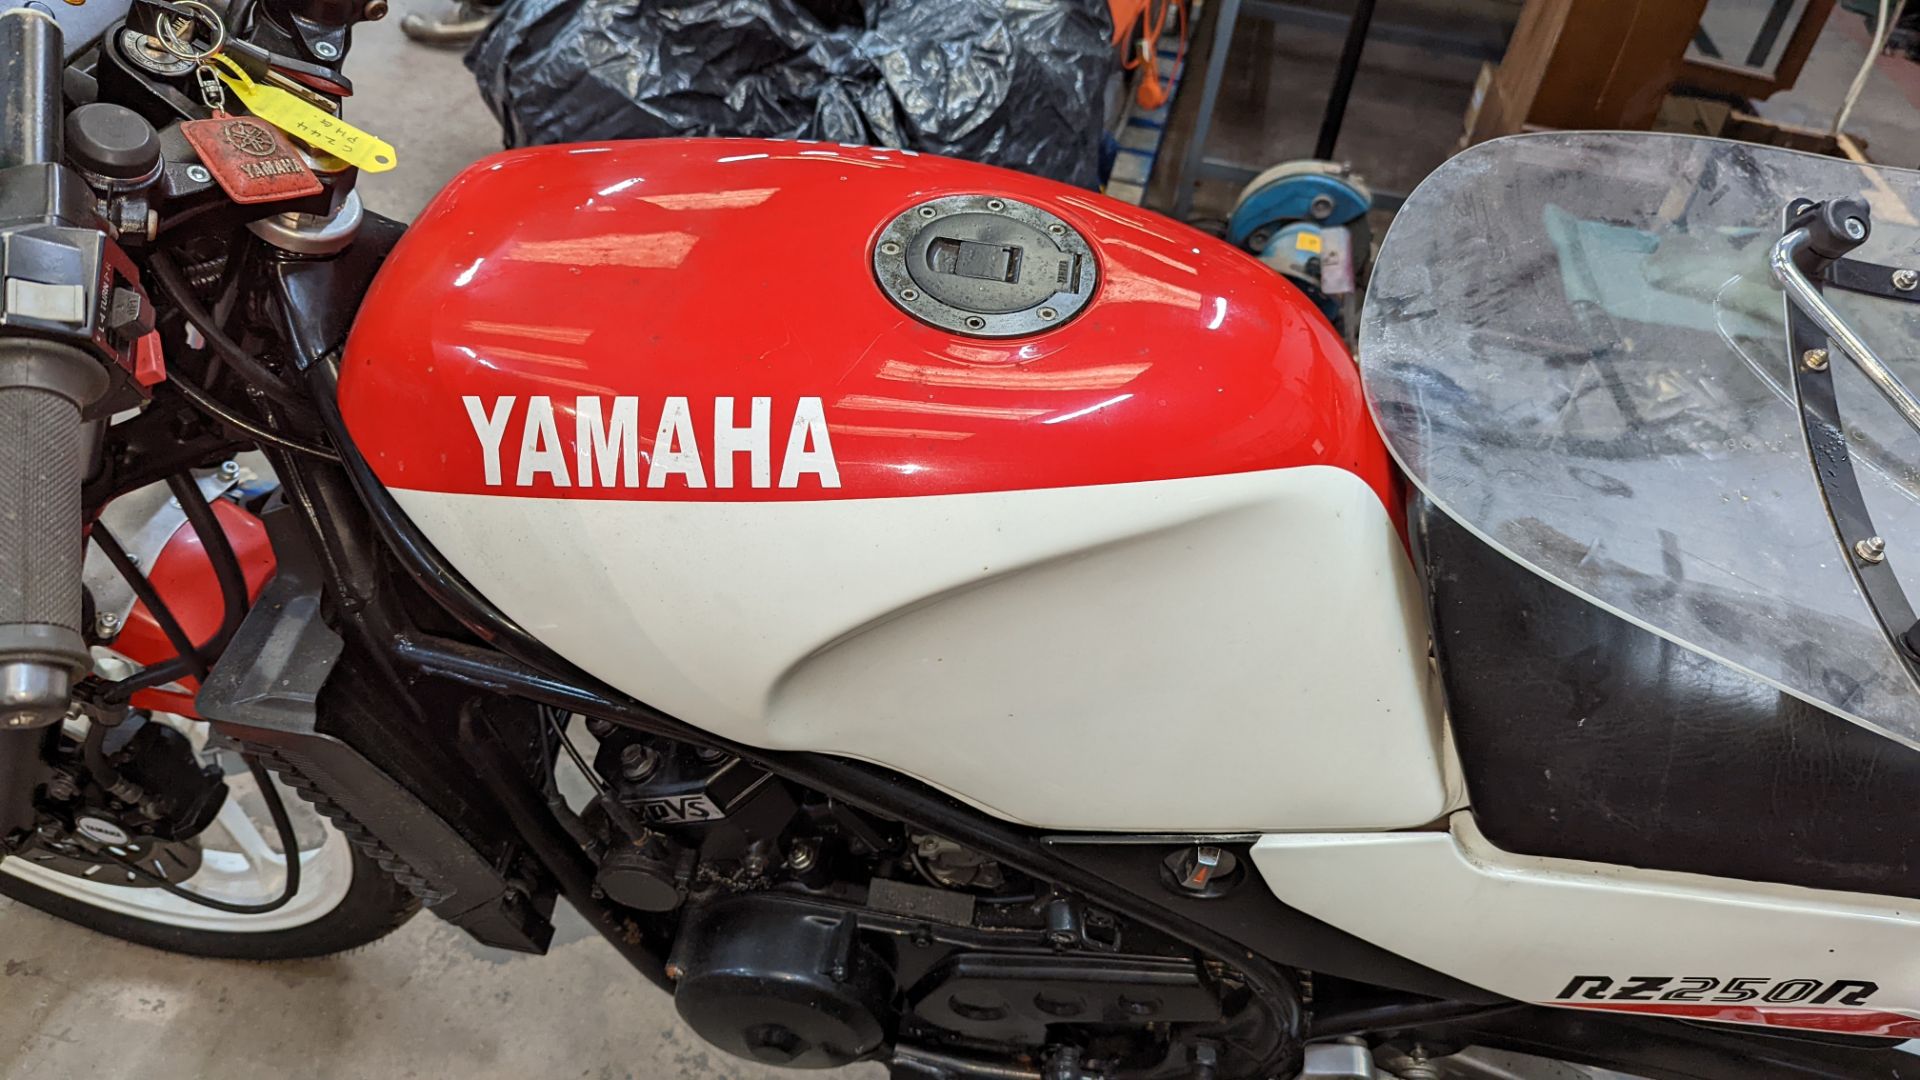 1994 Yamaha RZ250R motorcycle - Image 15 of 23